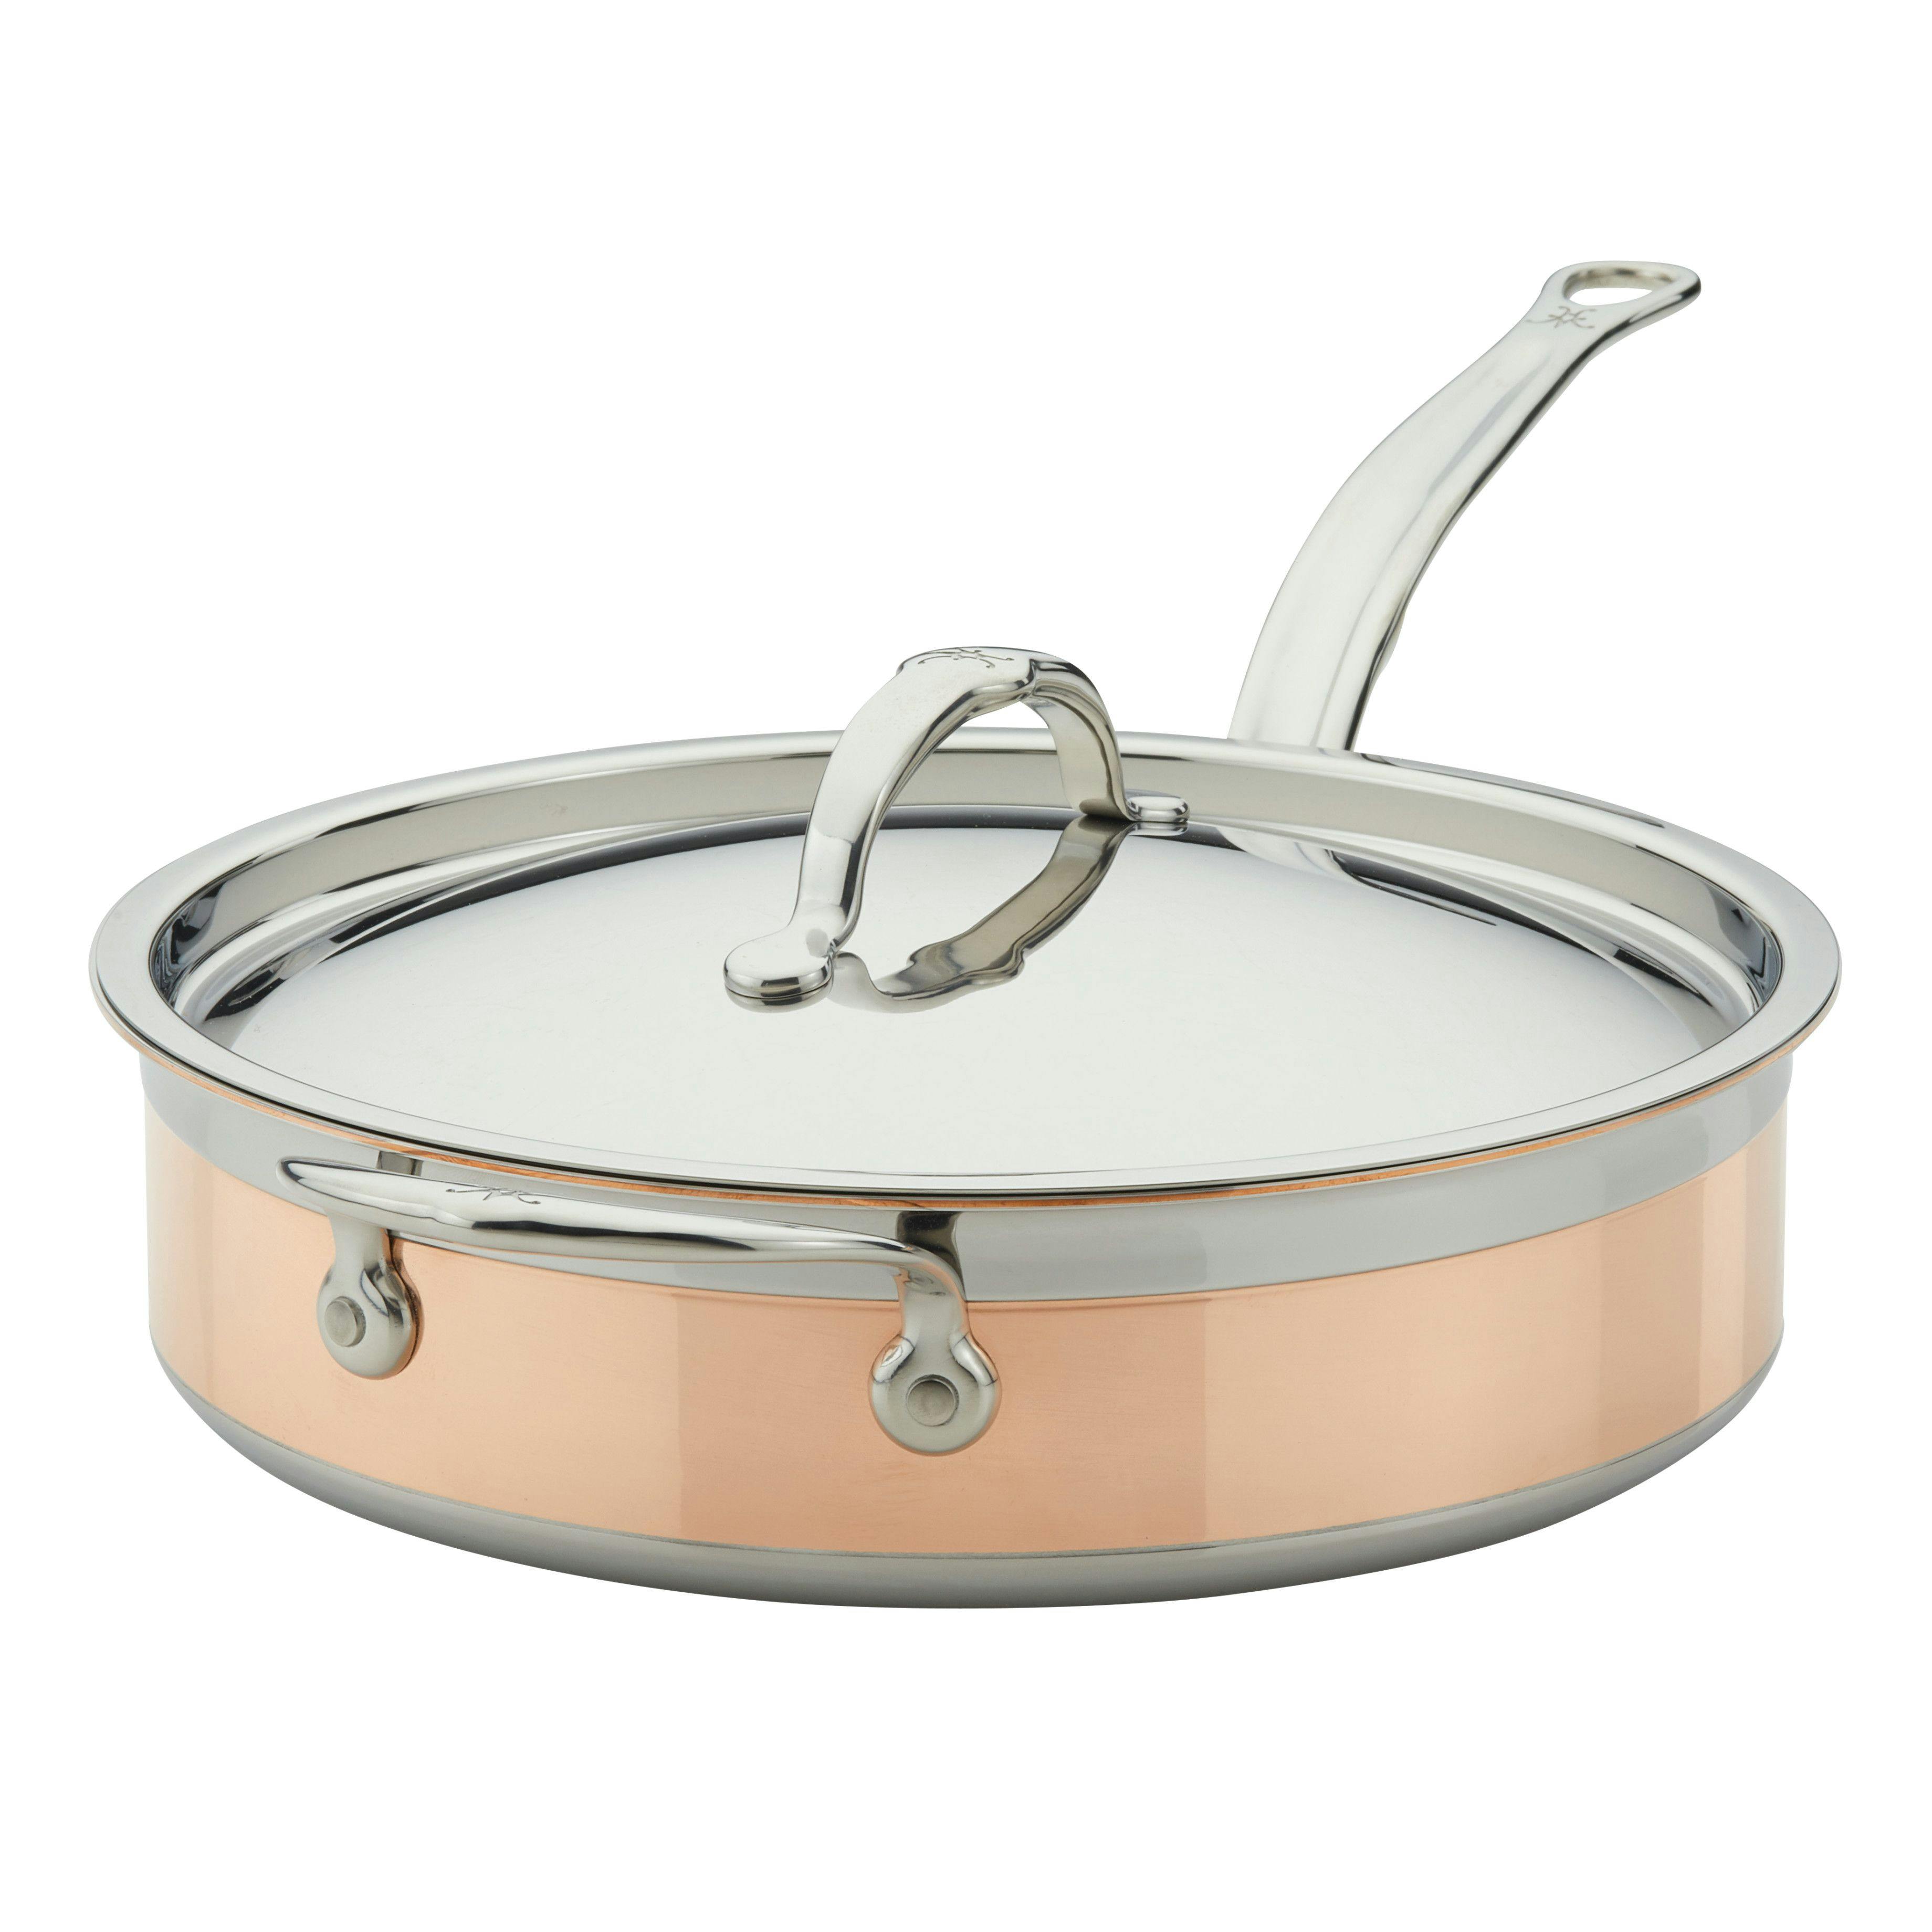 Hestan CopperBond Induction Copper 3.5 QT Covered Saute Pan